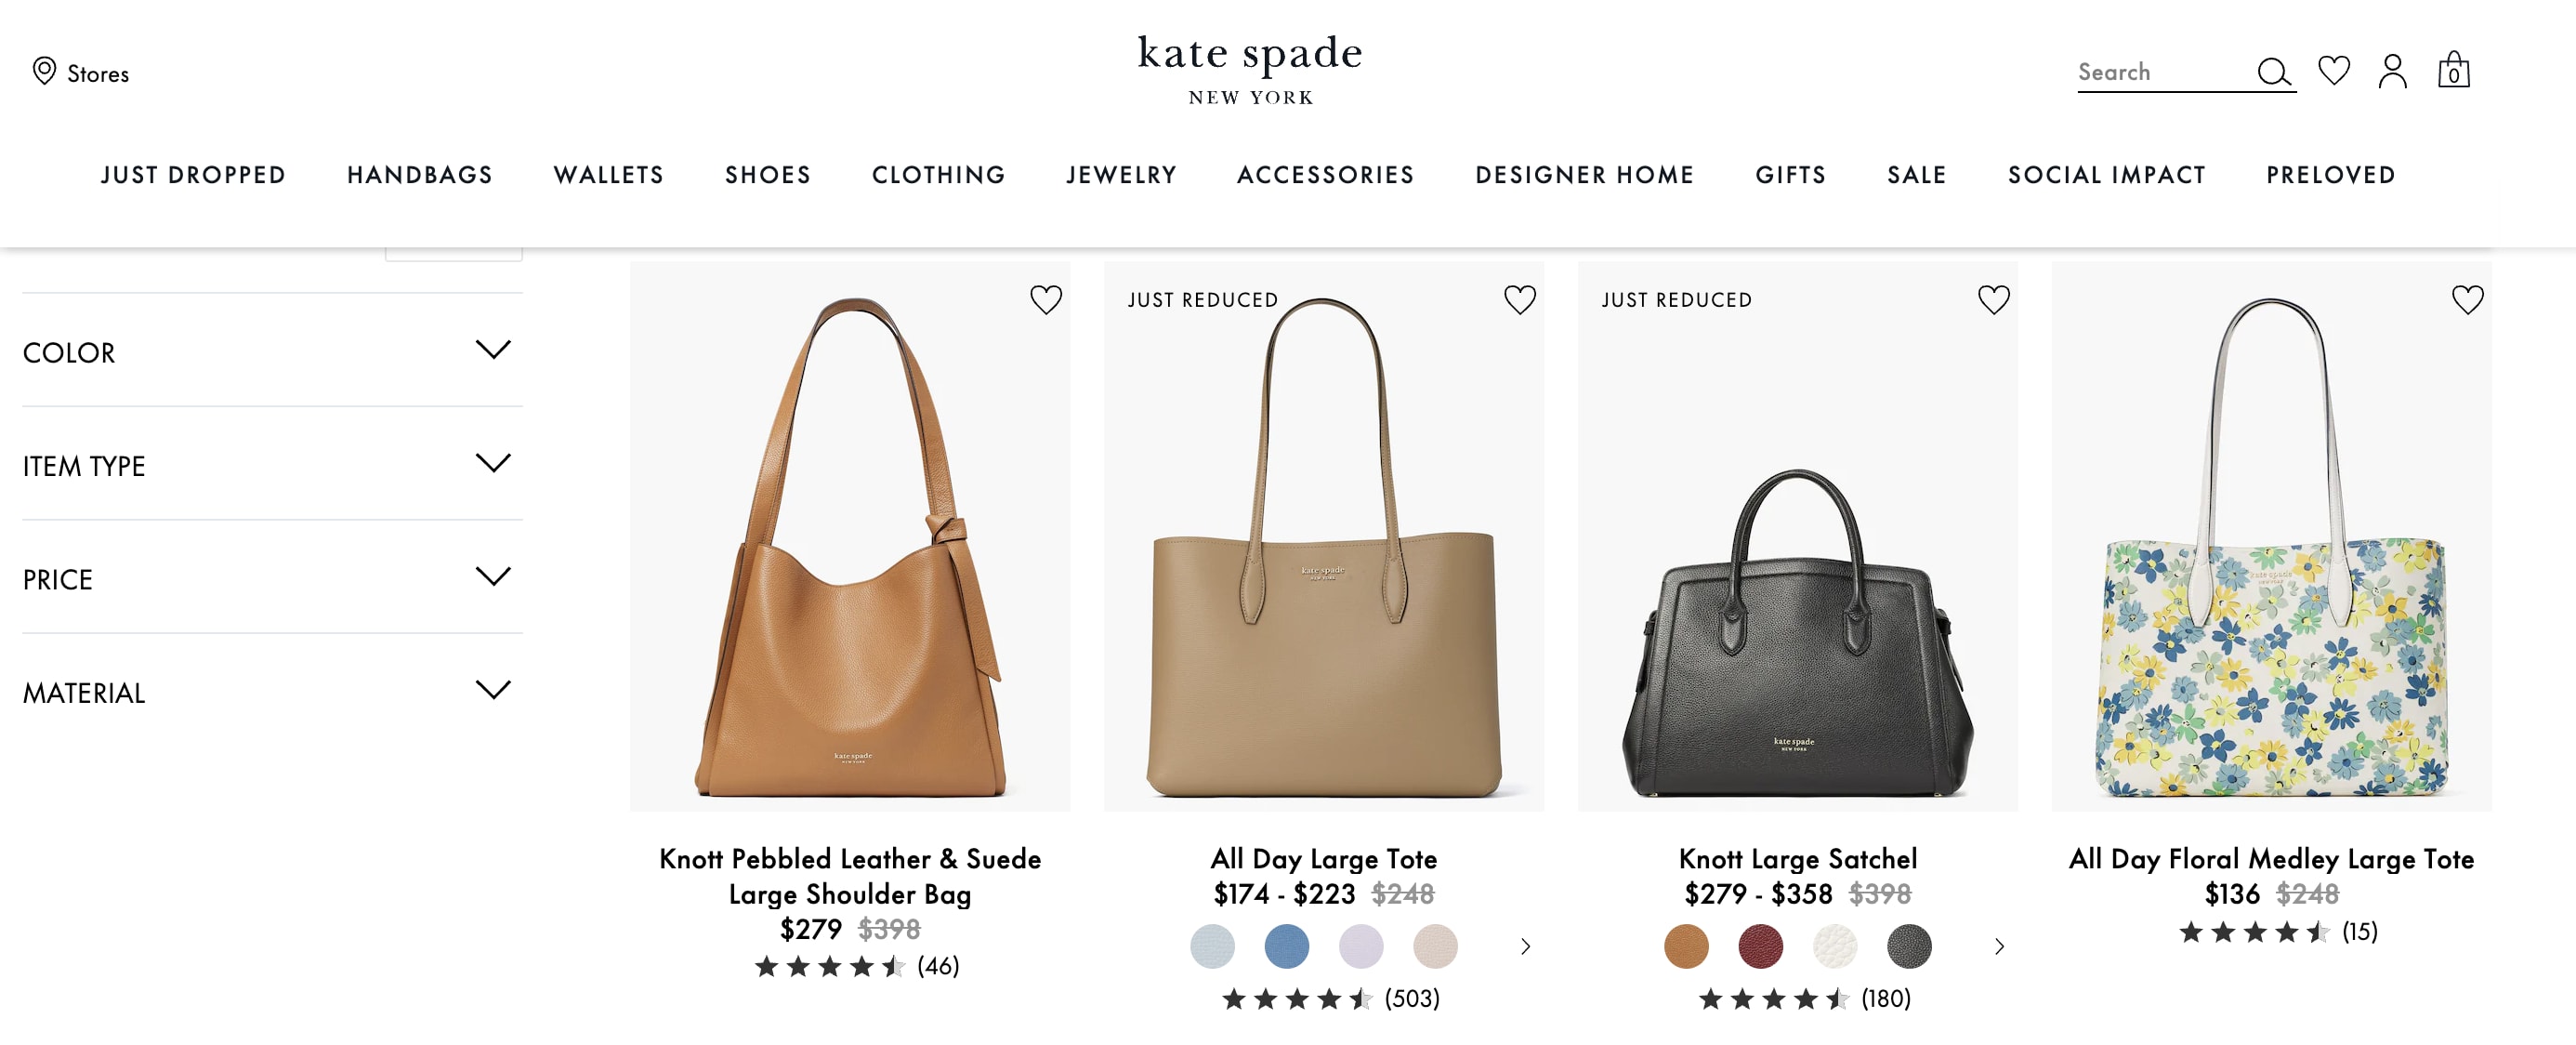 Kate Spade handbags on website